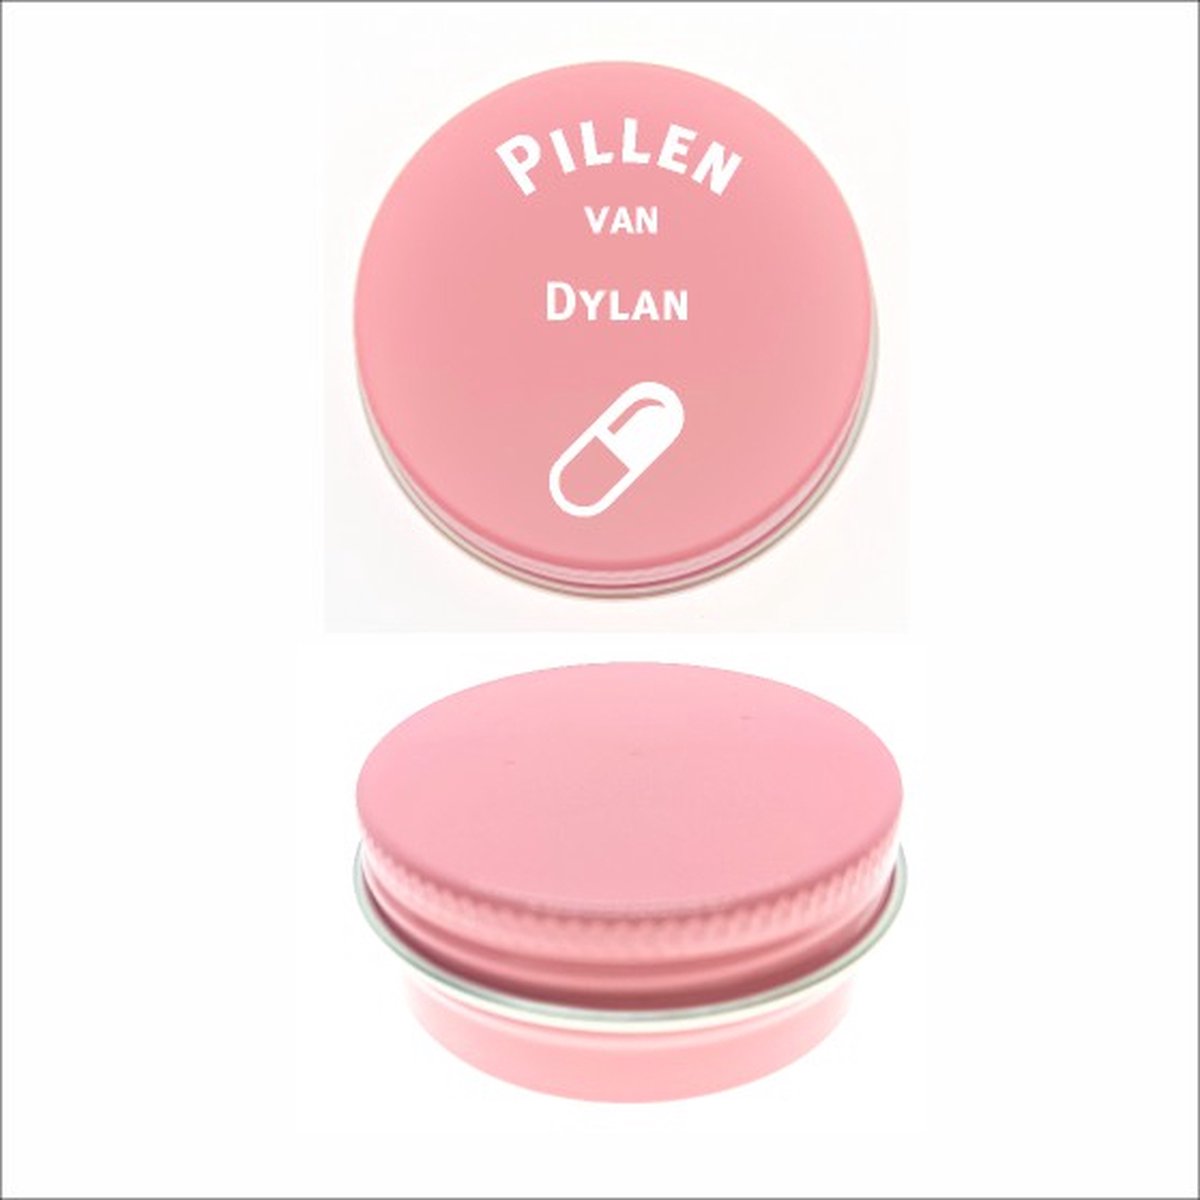 Pillen Blikje Met Naam Gravering - Dylan